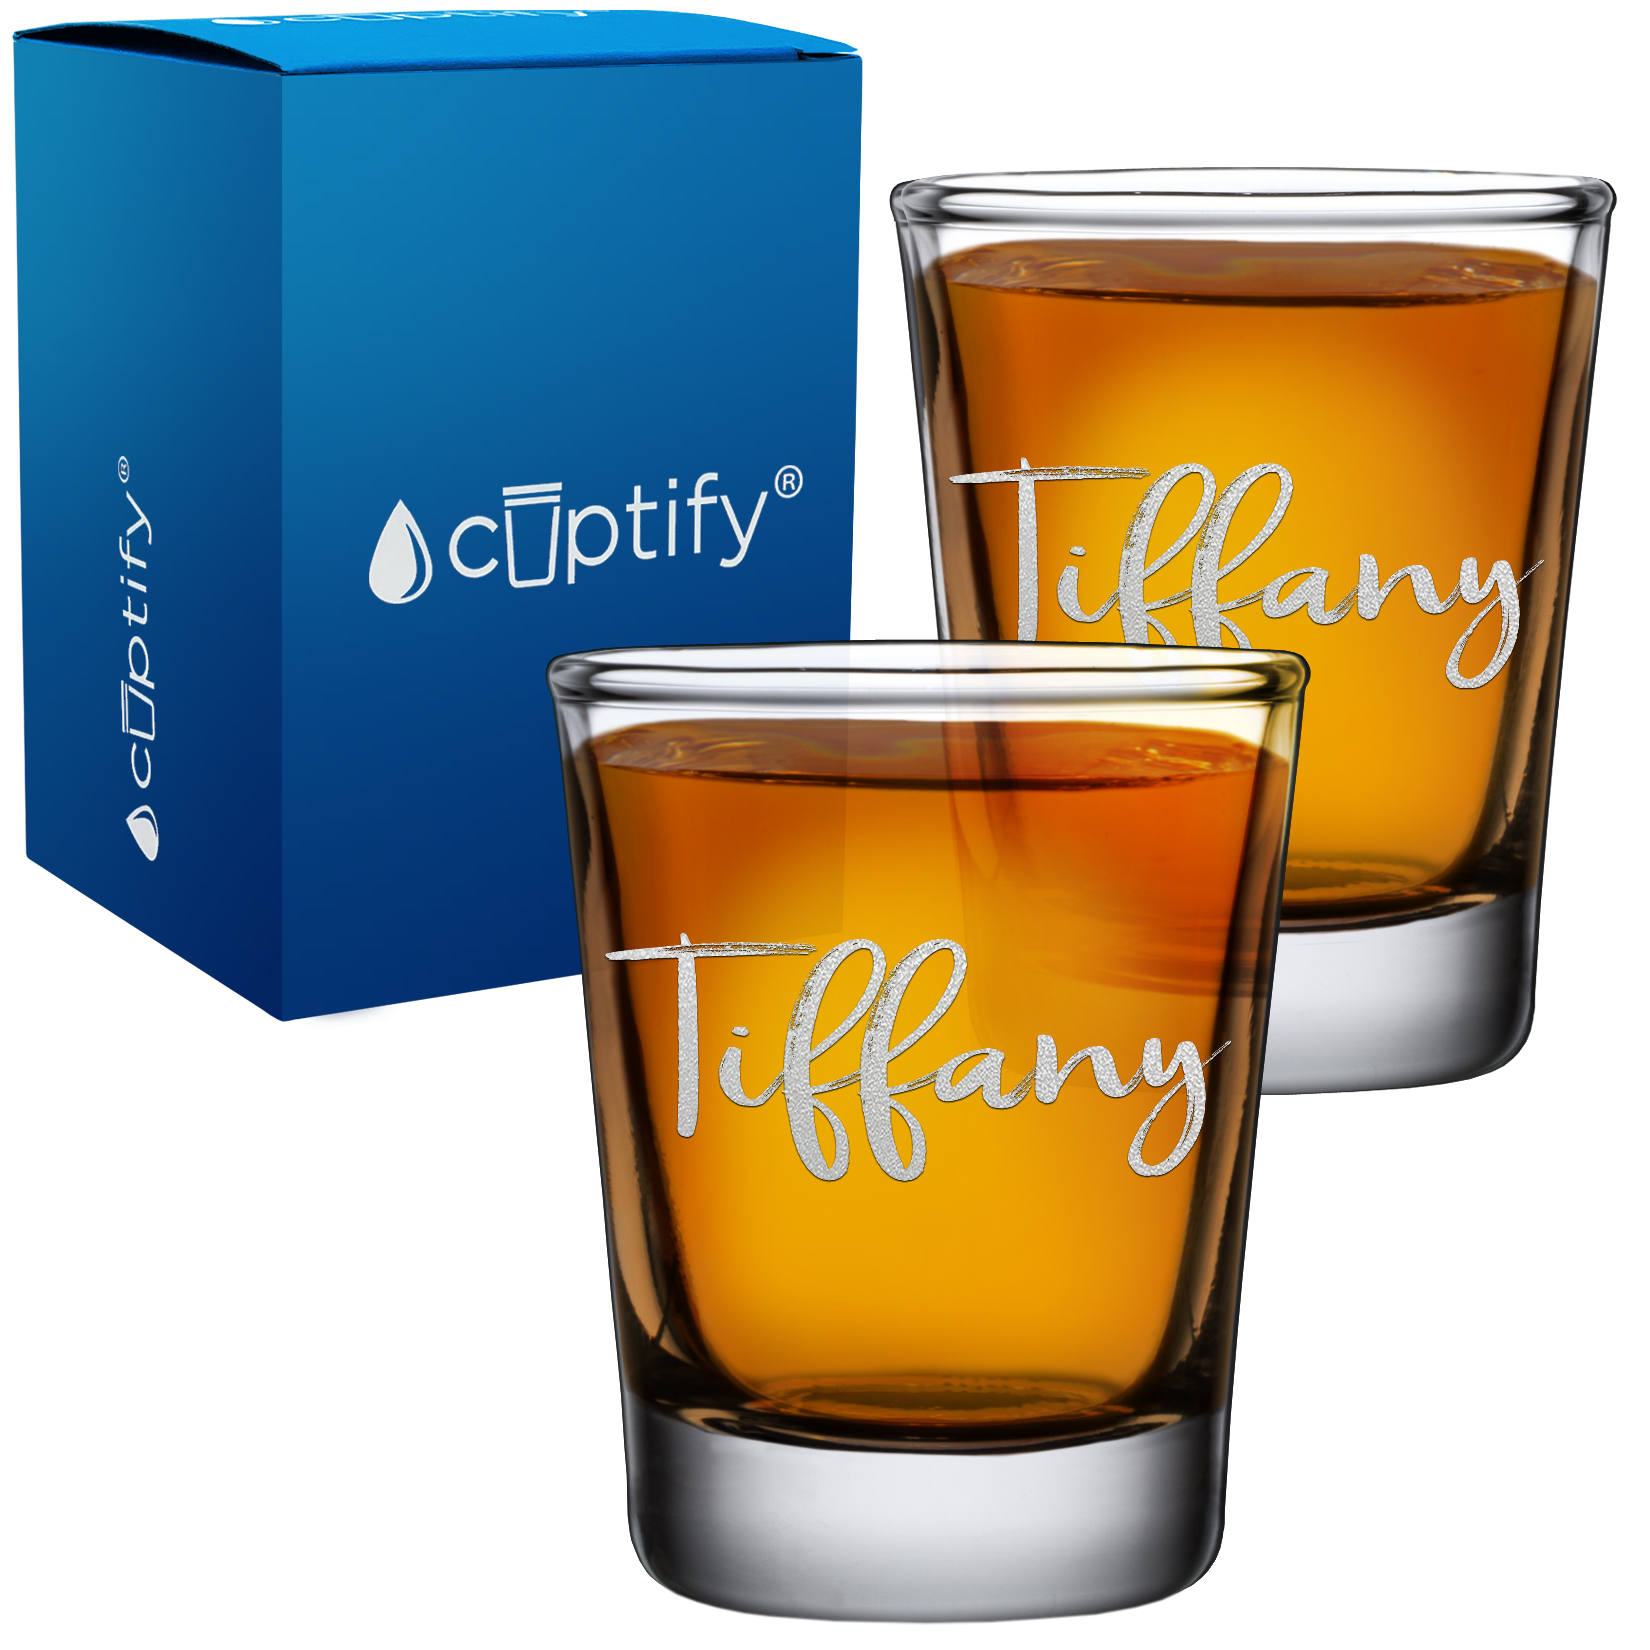 Personalized Tiffany Style 2oz Shot Glasses - Set of 2